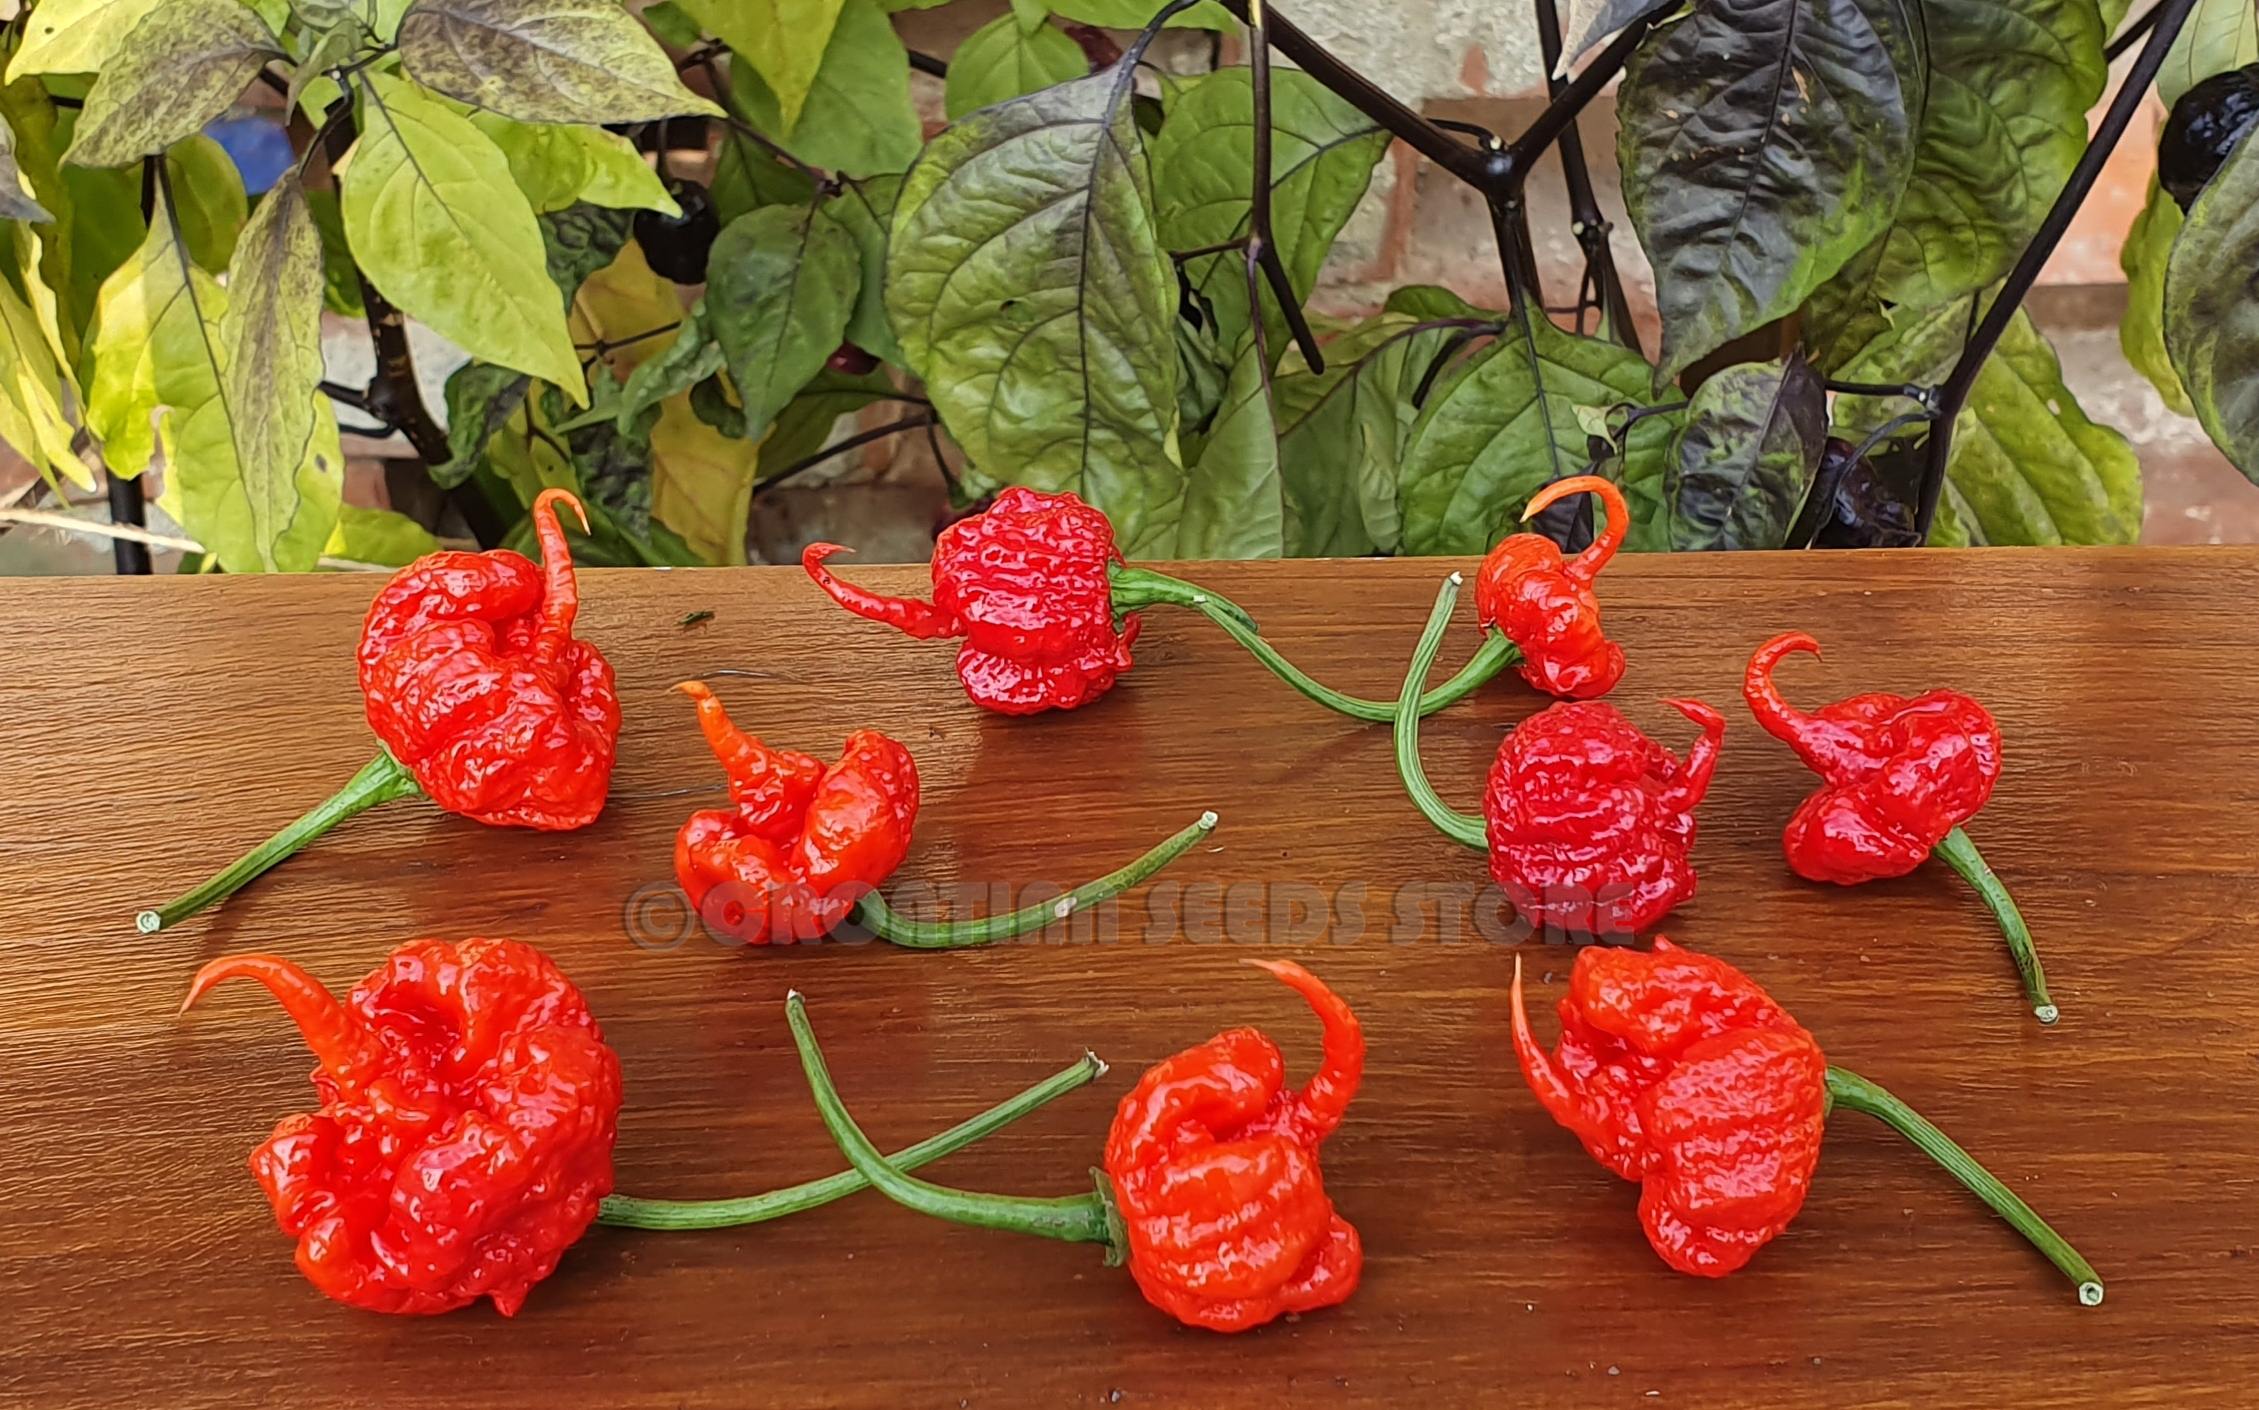 Hot Chilli Peppers Dragons Breath Hot Chili Pepper